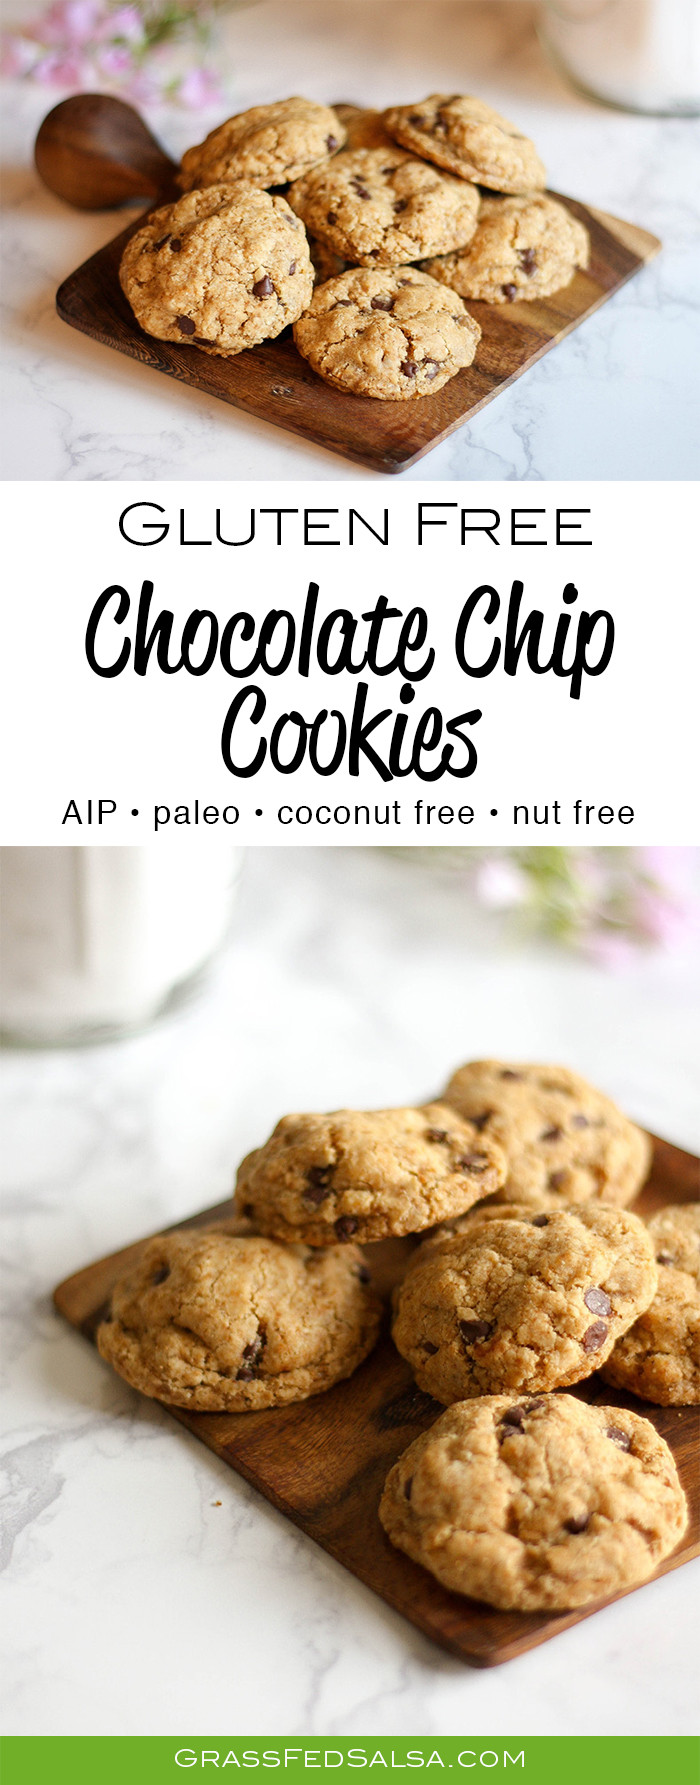 Gluten Free Dairy Free Chocolate Chip Cookies
 The Best Gluten Free Chocolate Chip Cookies AIP Paleo